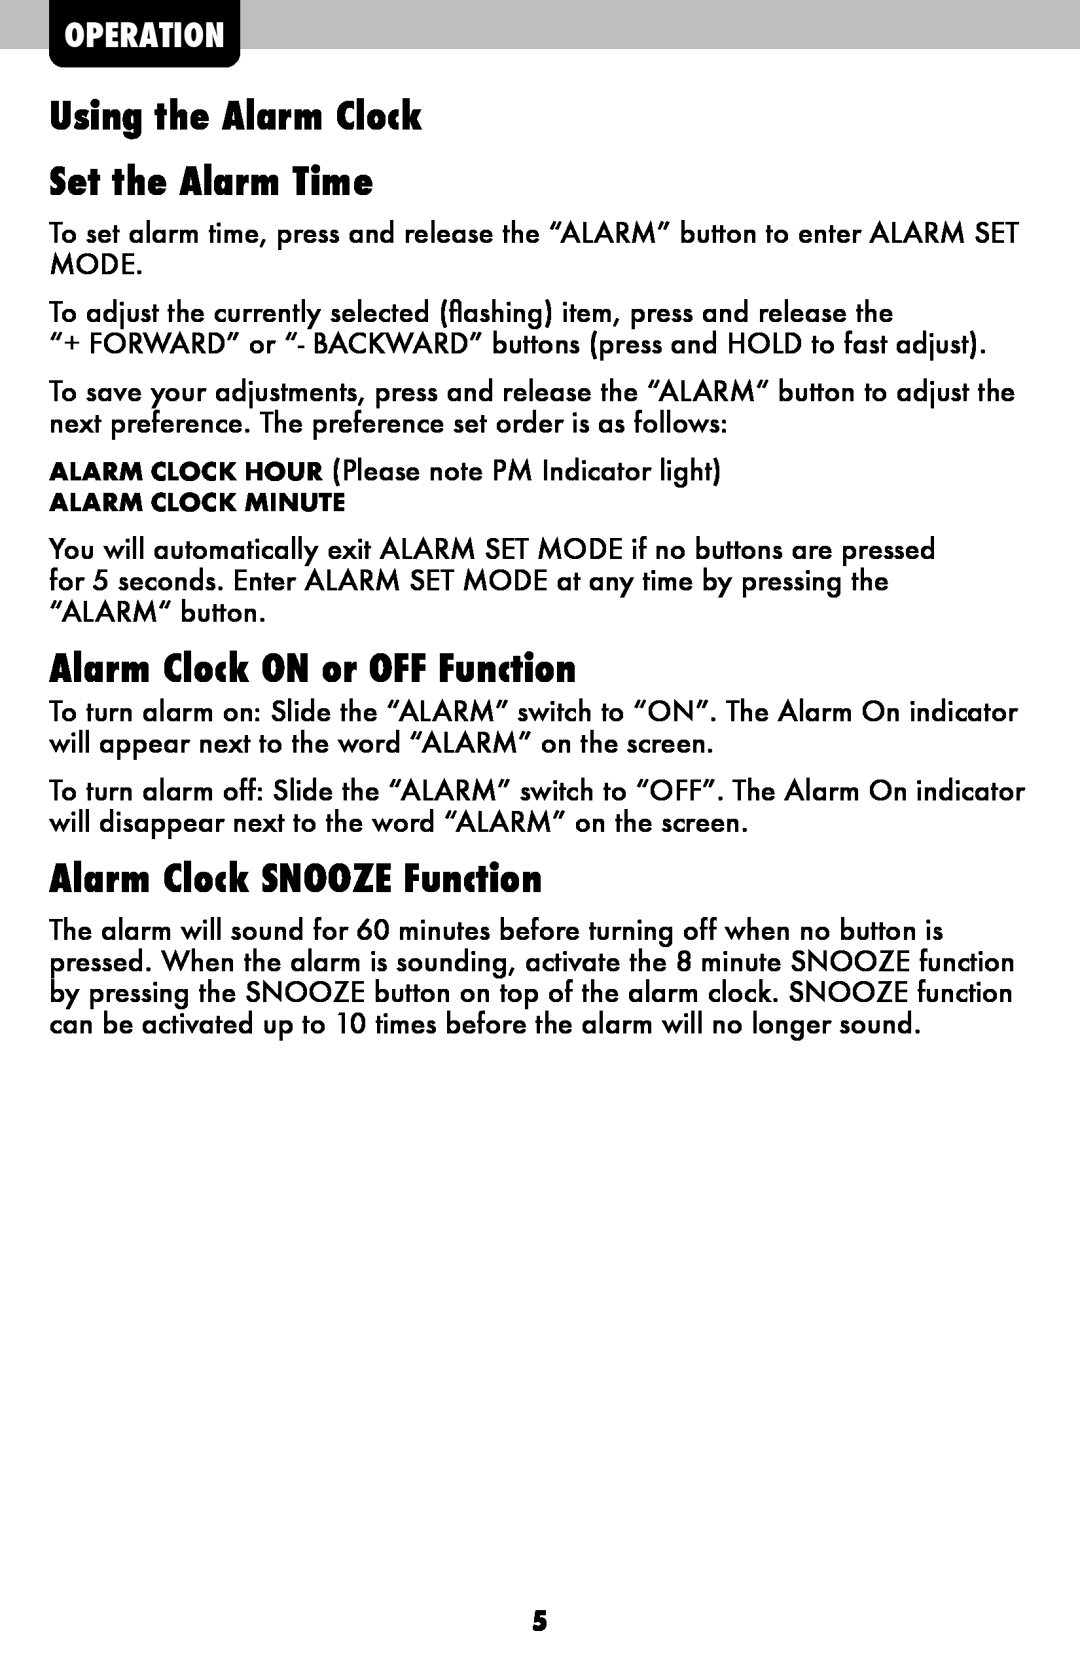 Acu-Rite 13001 Using the Alarm Clock Set the Alarm Time, Alarm Clock ON or OFF Function, Alarm Clock SNOOZE Function 